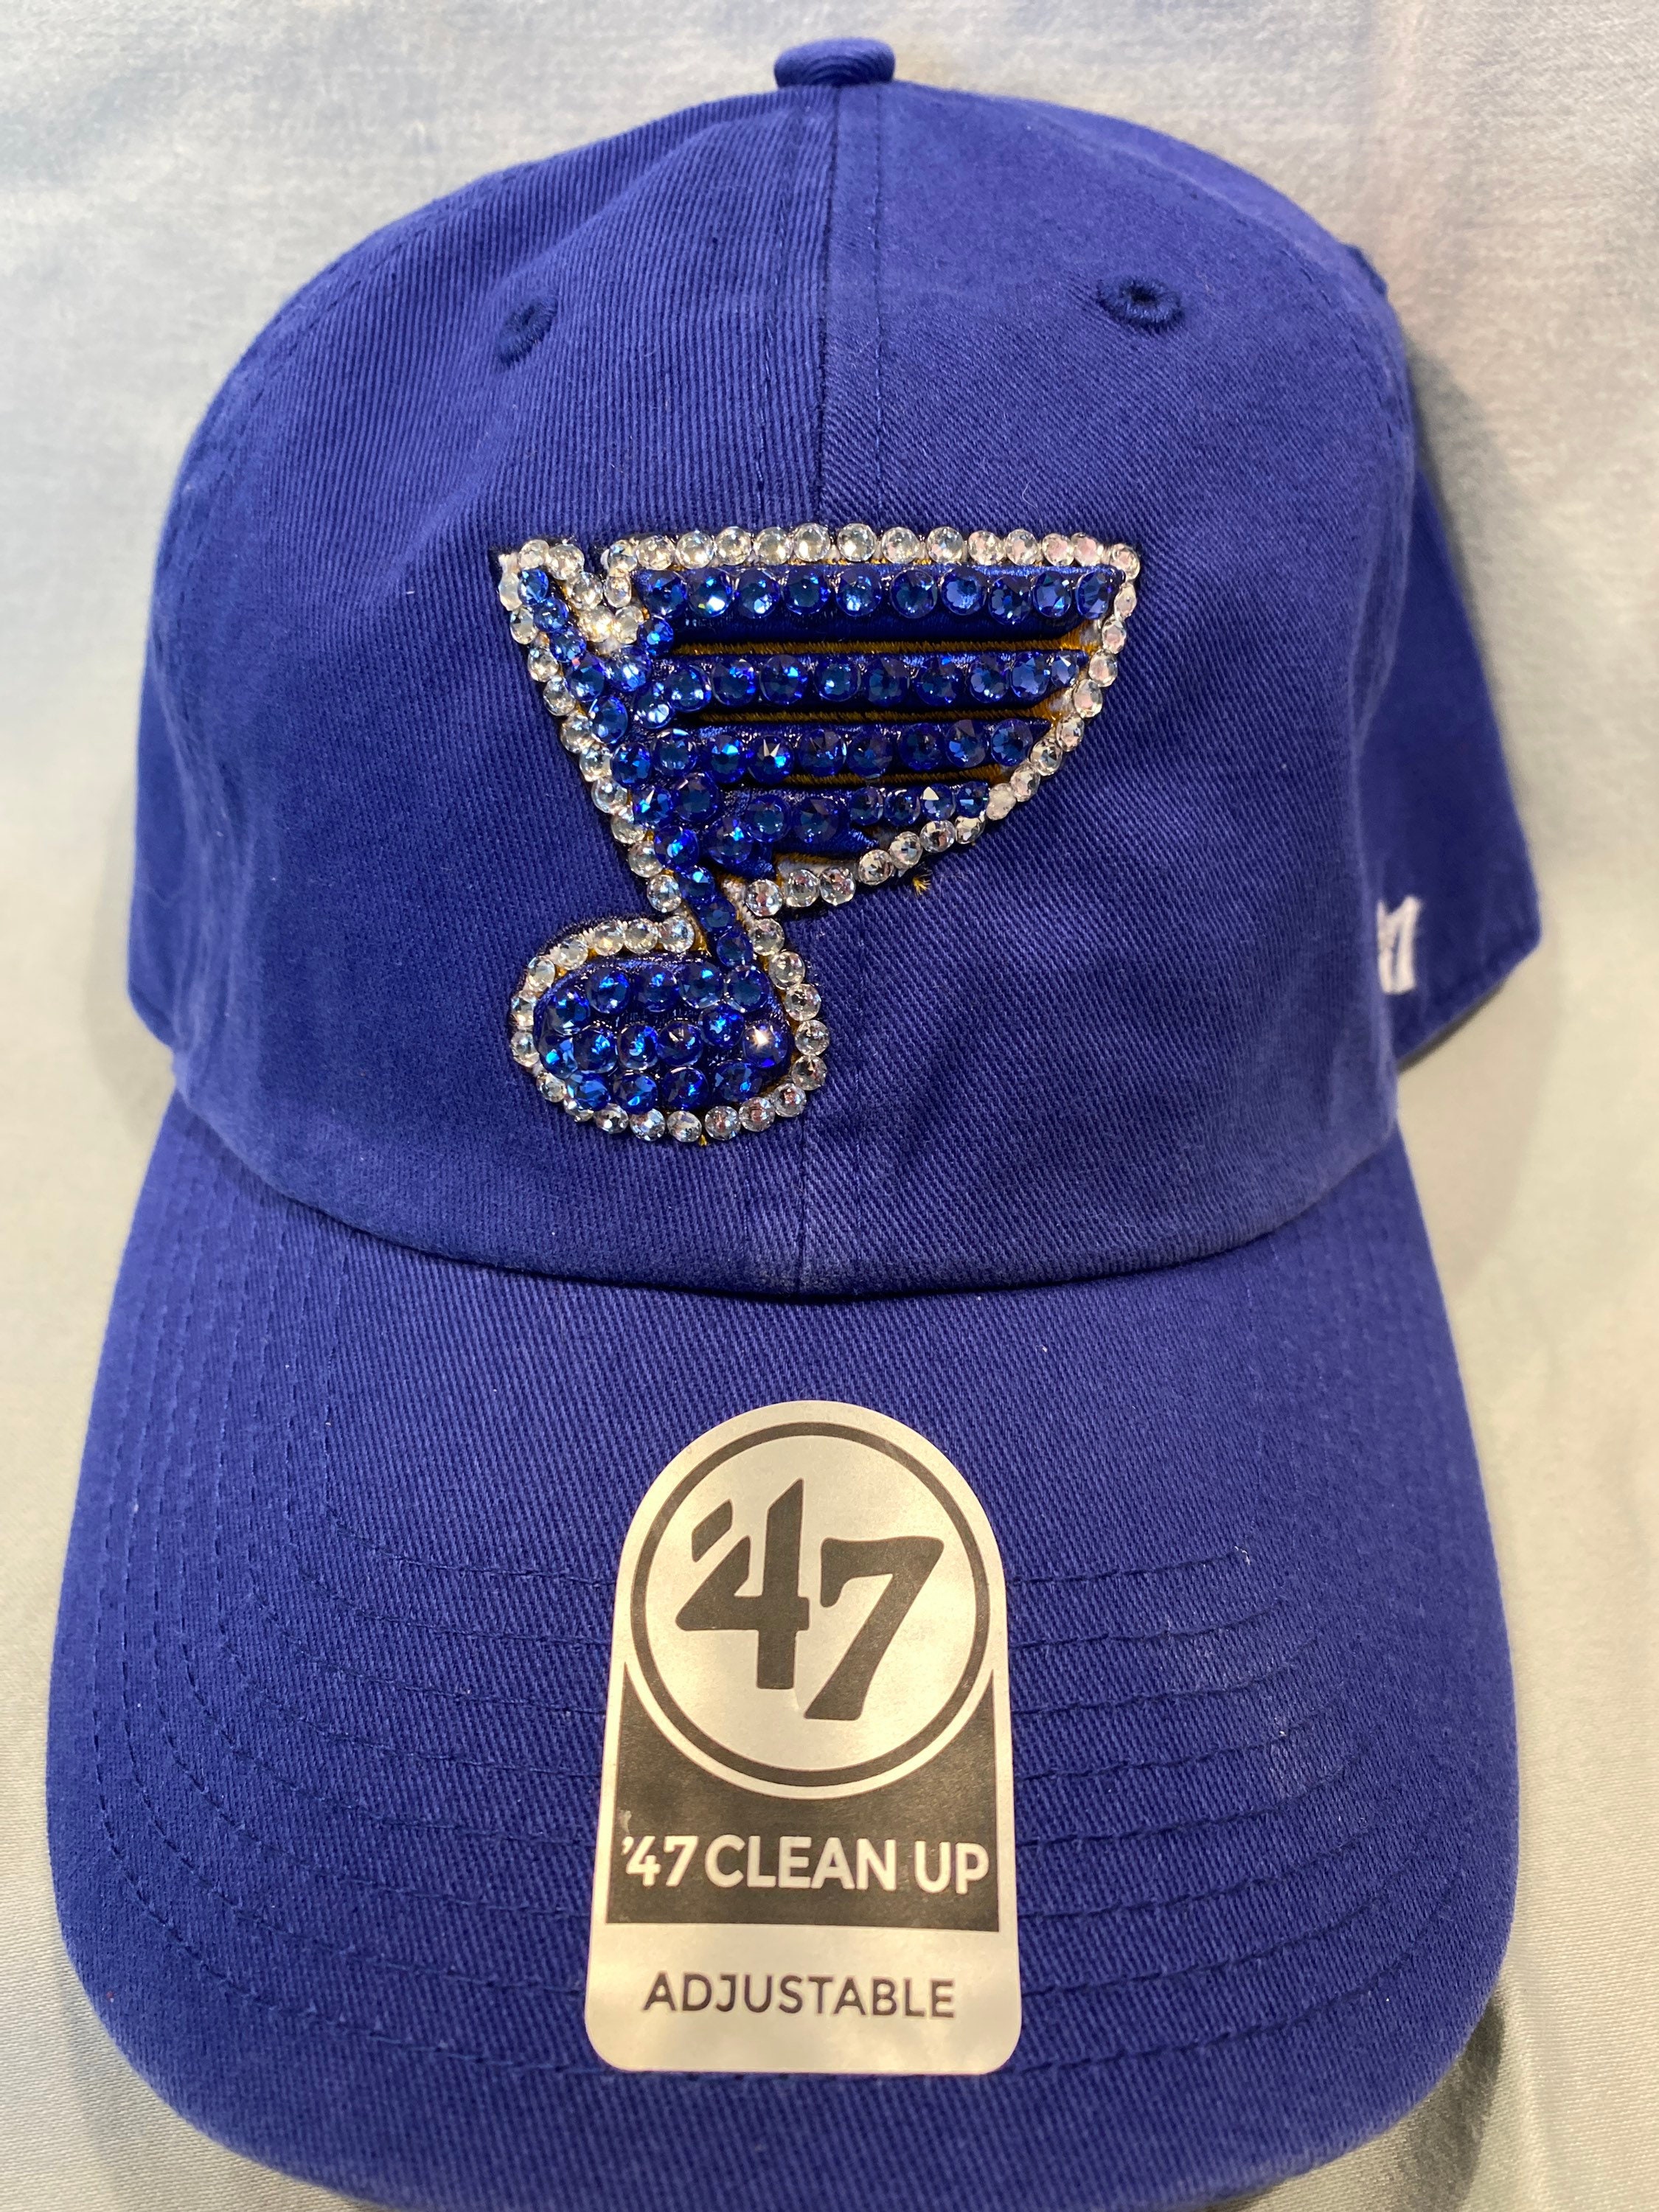 St. Louis Blues Youth - Airmesh Trucker NHL Hat